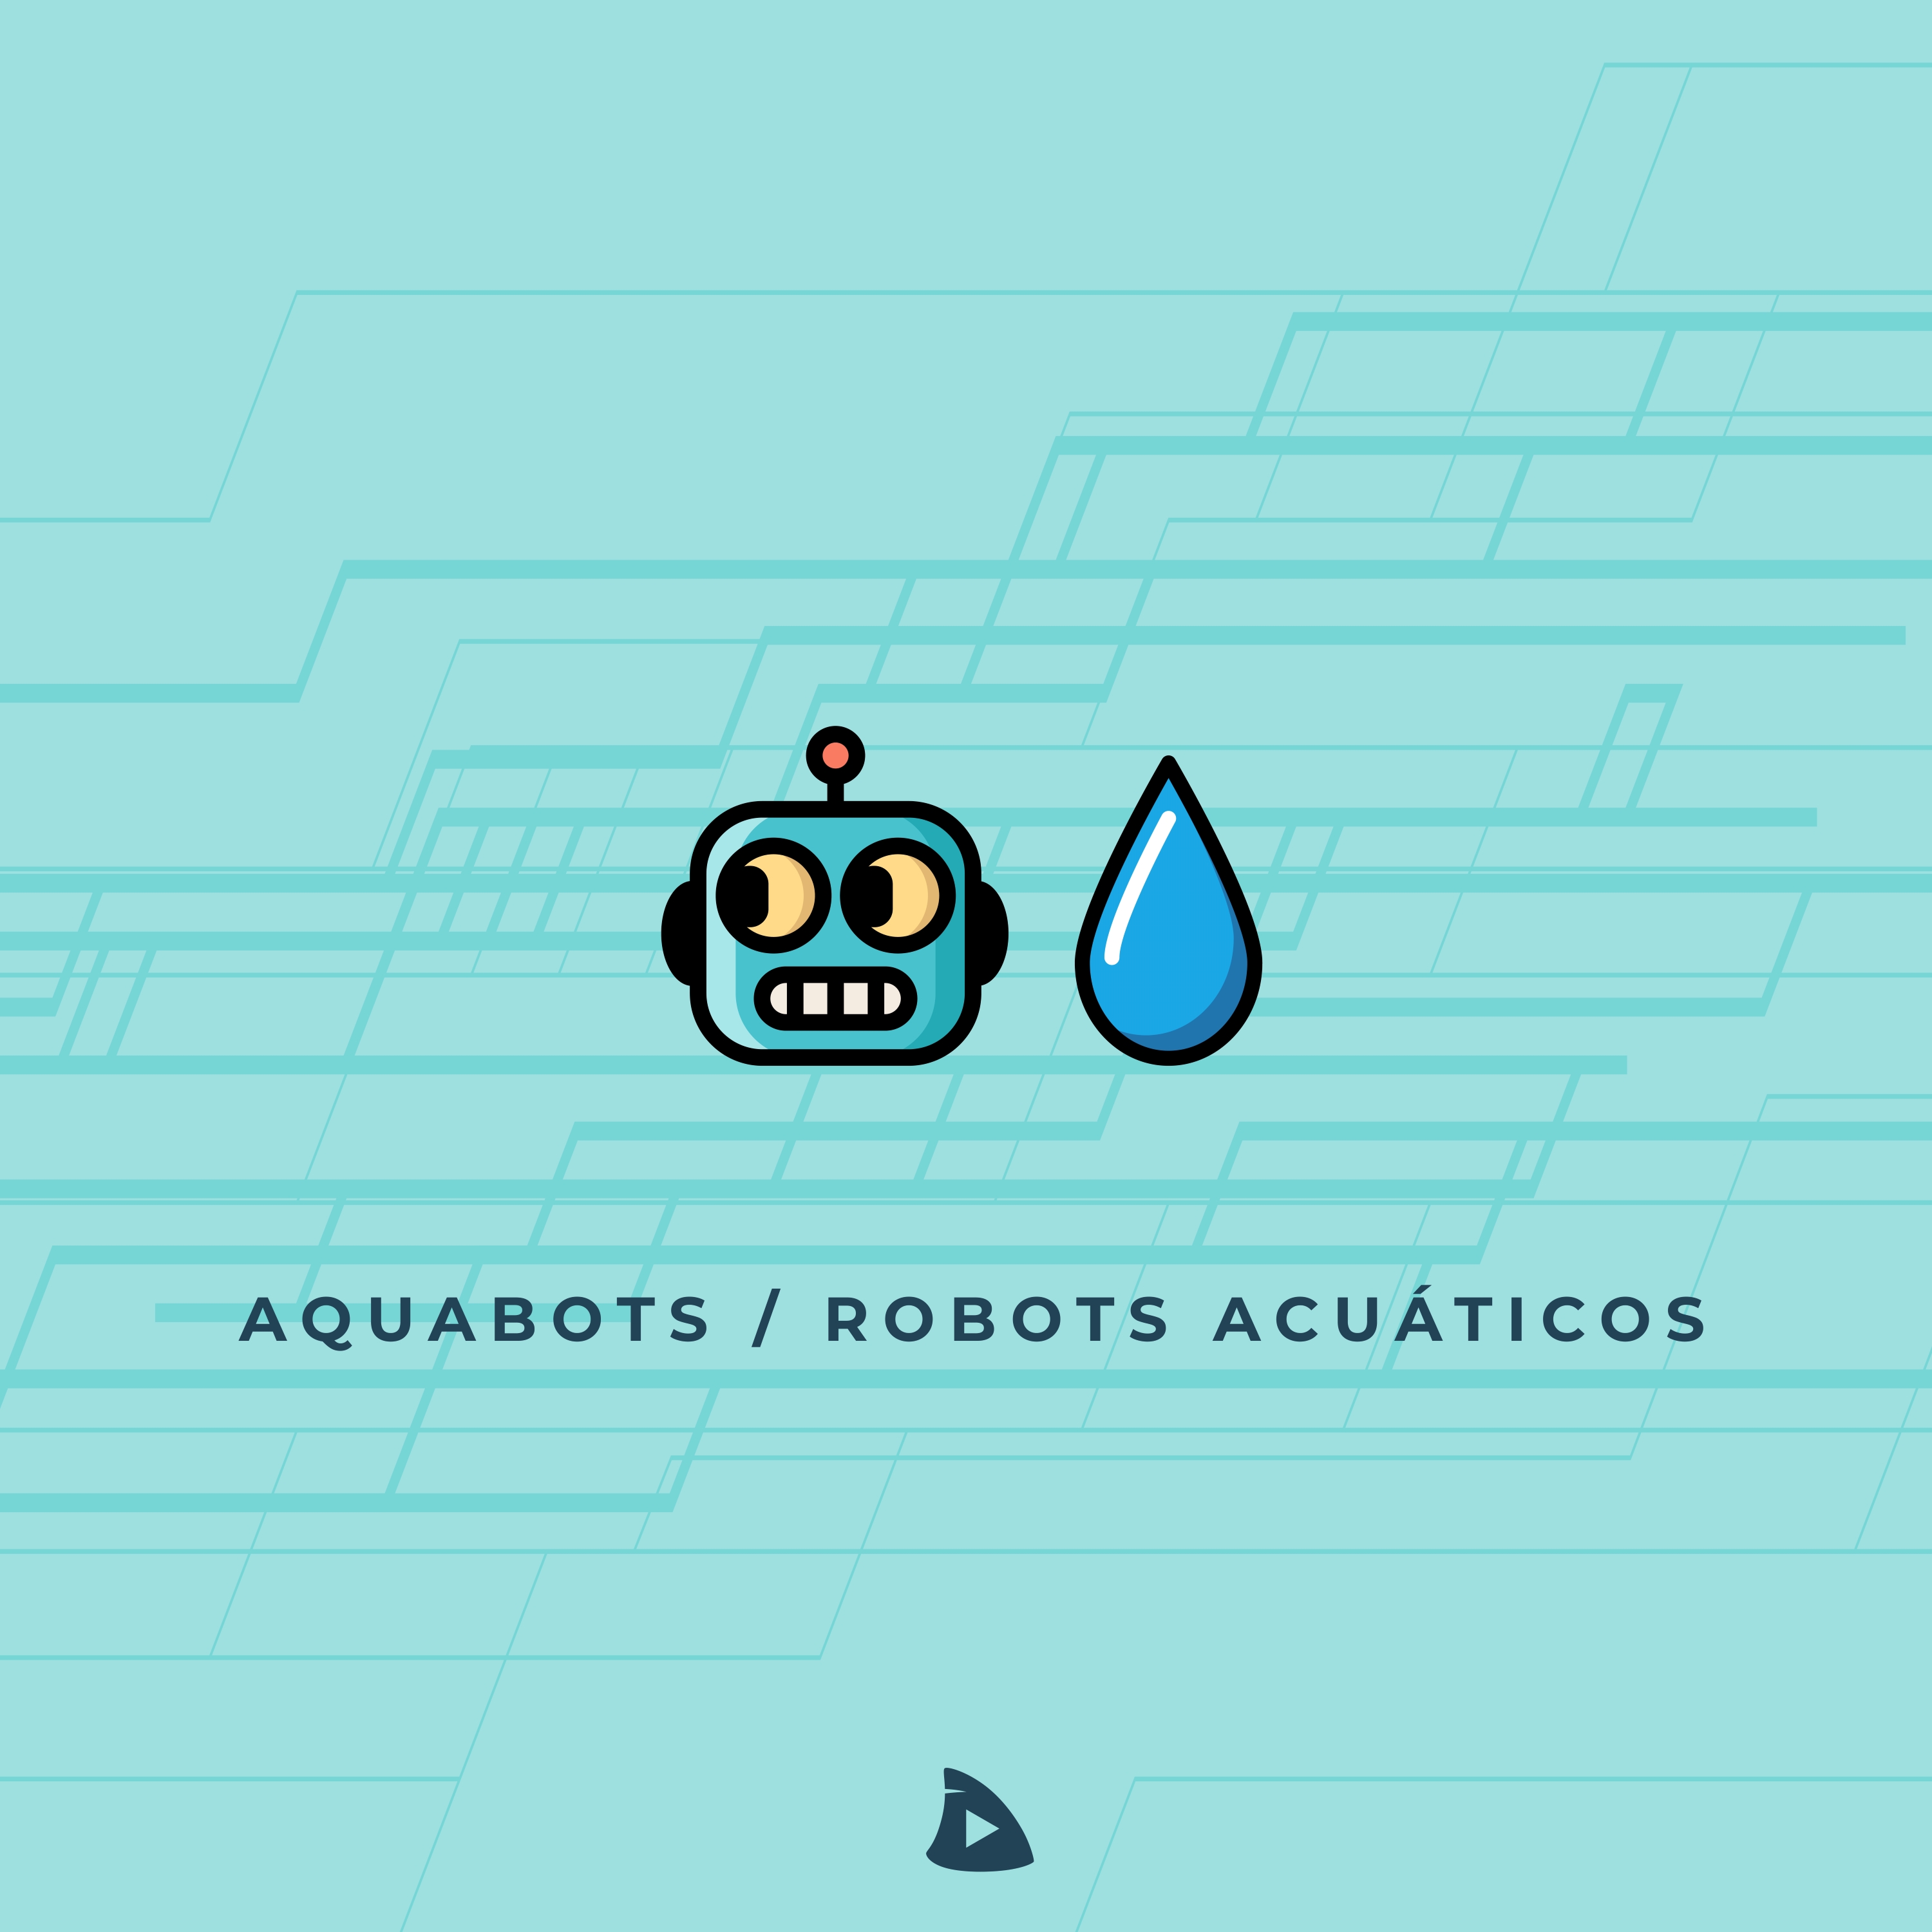 Aquabots / Robots Acuáticos